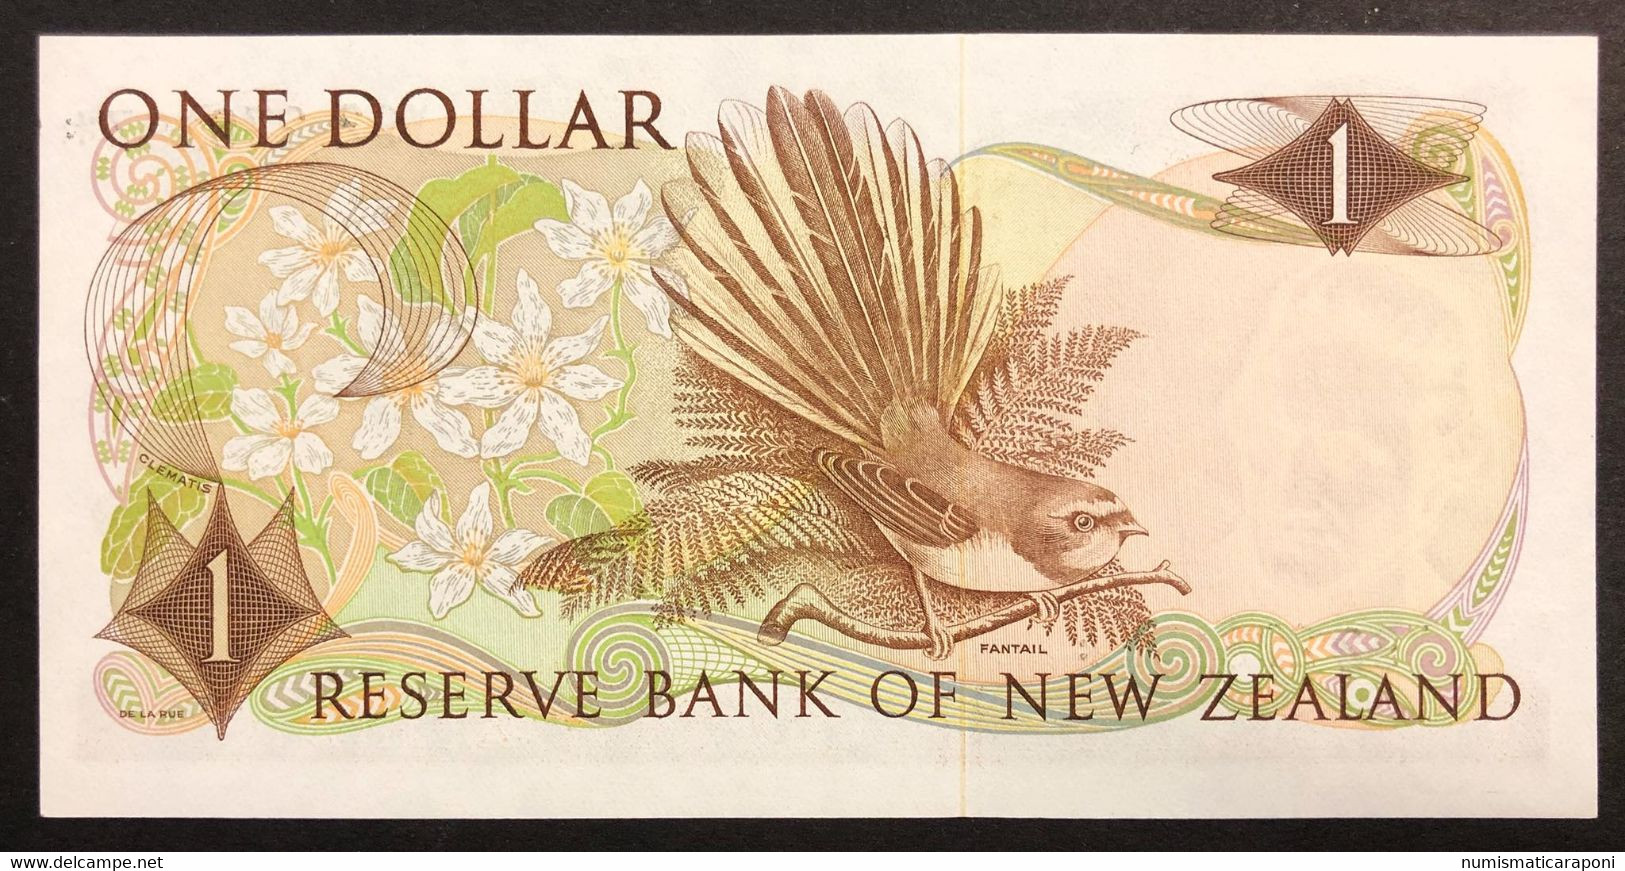 Nuova Zelanda NEW ZEALAND 1 Dollar  (1977-81) $ STAR REPLACEMENT PICK#163d  LOTTO 3706 - New Zealand